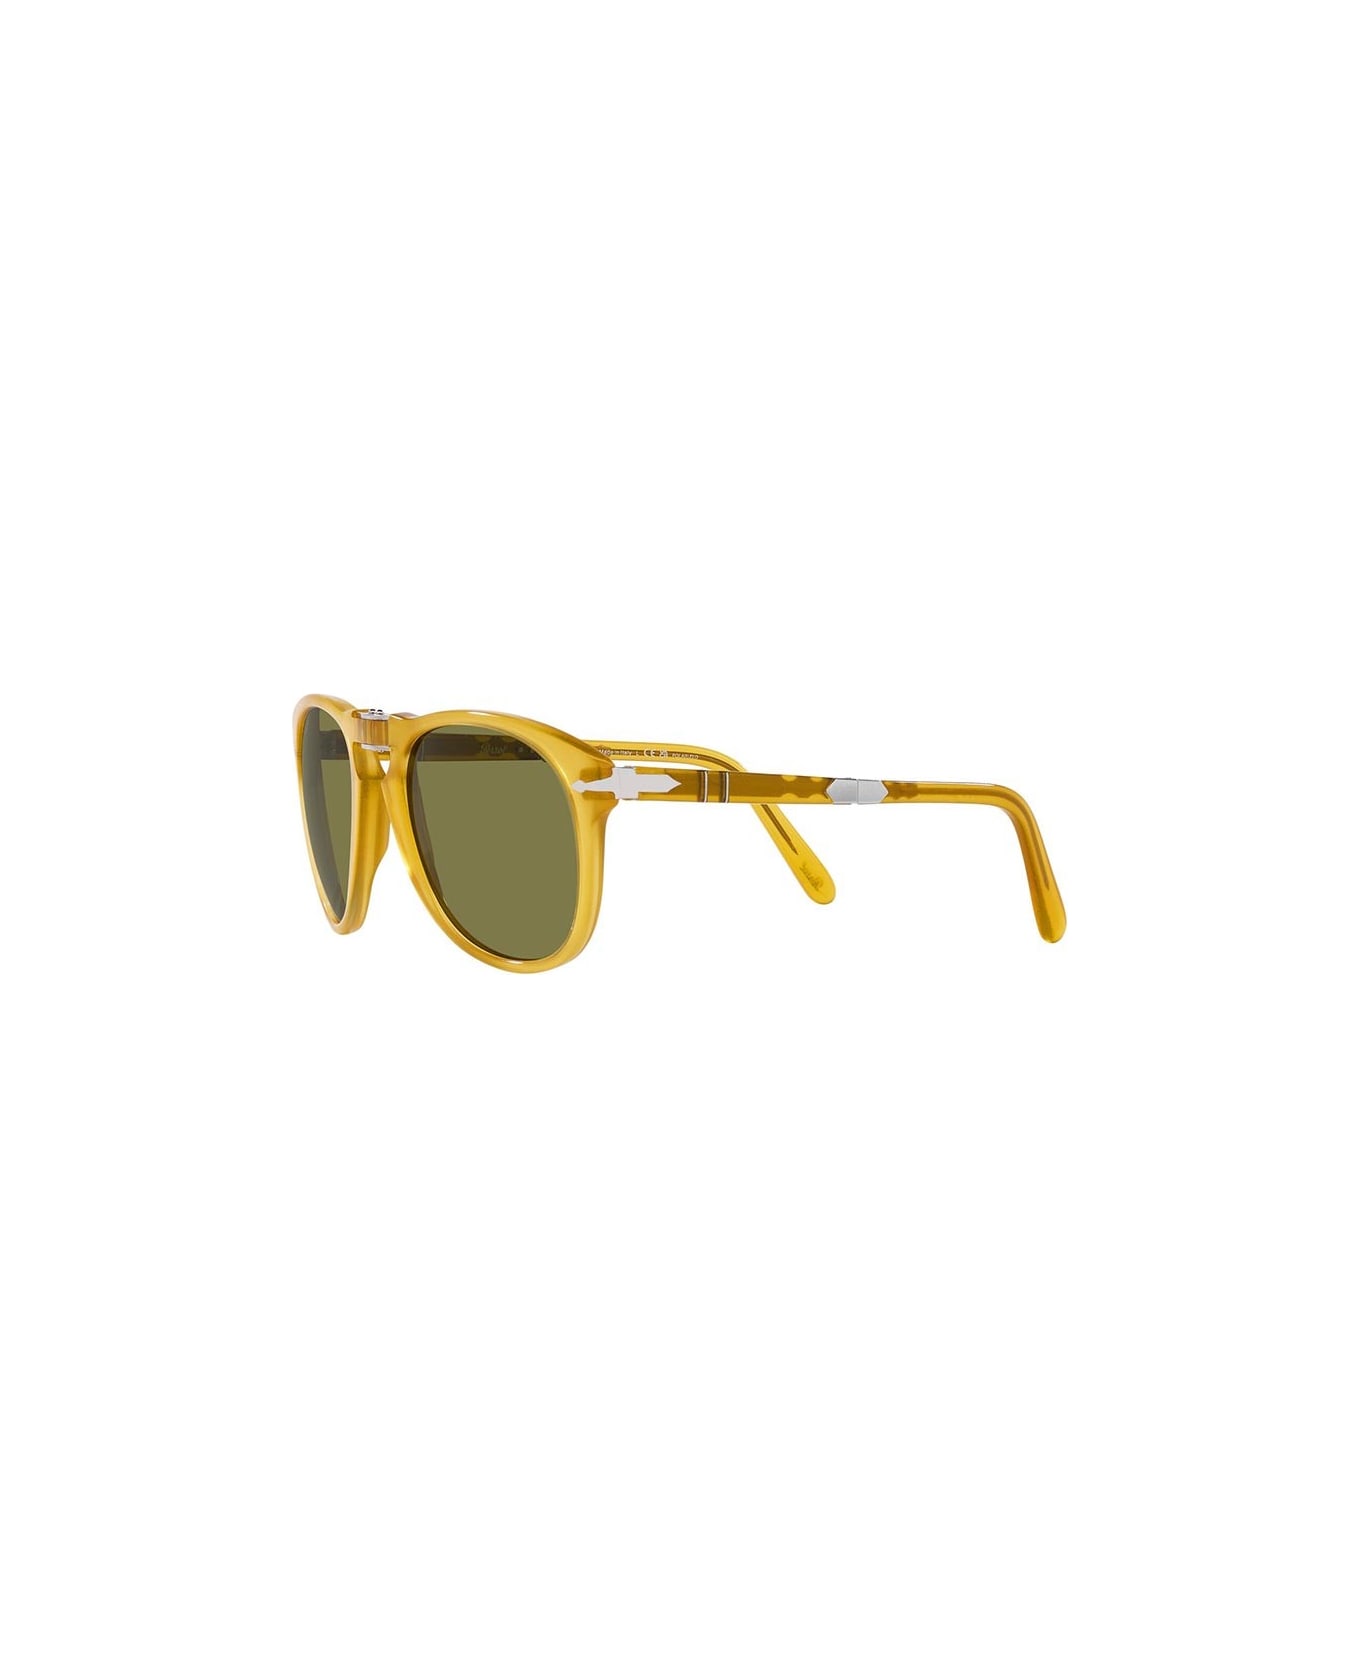 Persol Sunglasses - Giallo/Verde サングラス